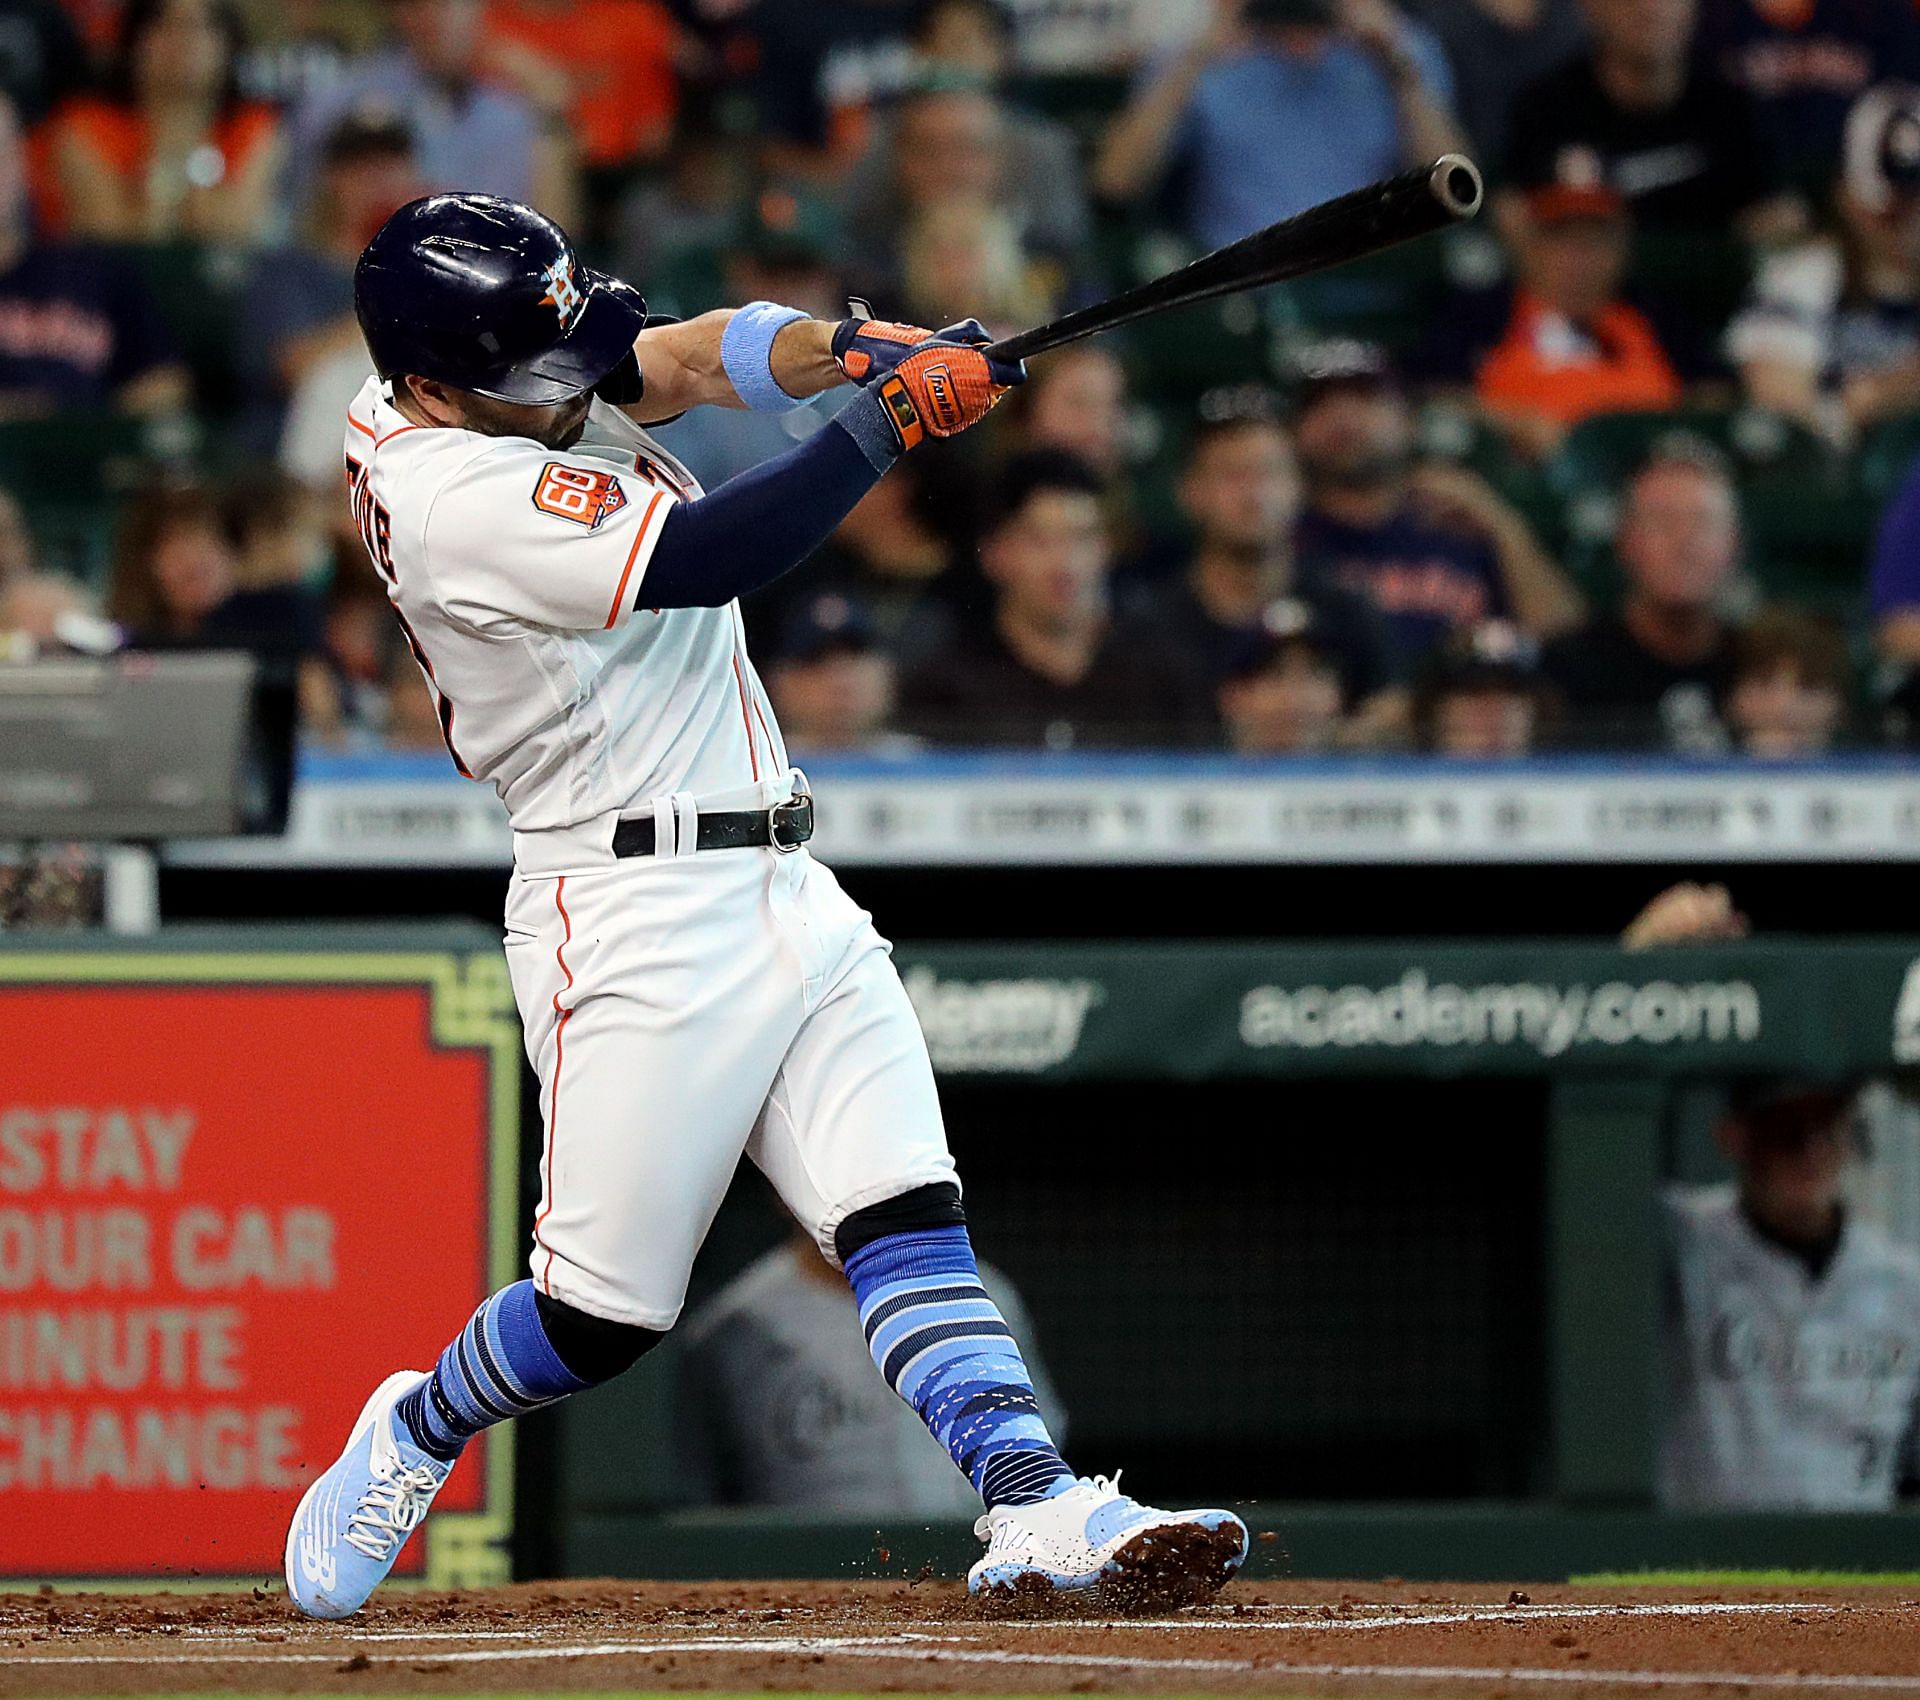 Houston Astros star Jose Altuve crushing a homer